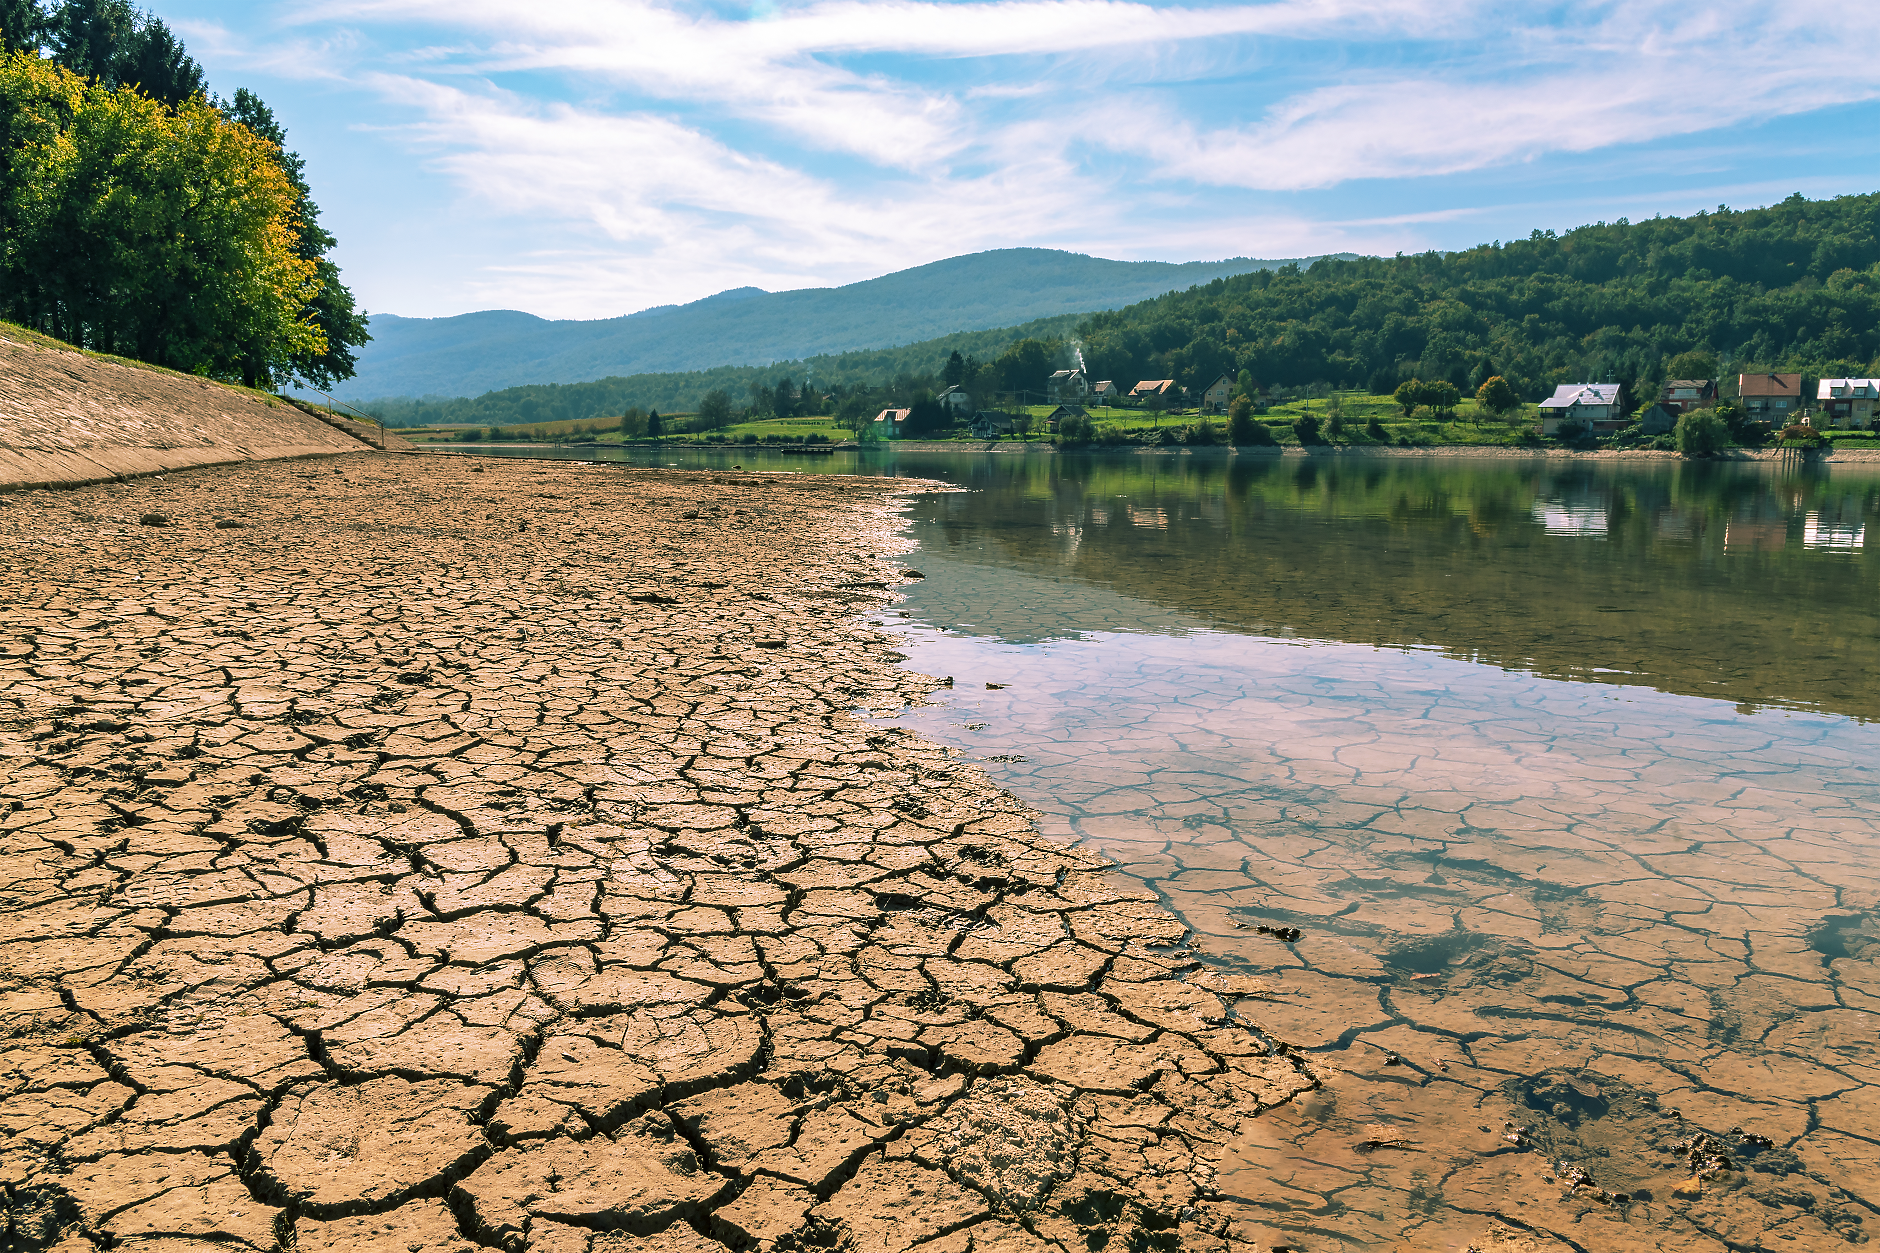  Европа е изправена пред водна криза заради сушата и неразумните политики